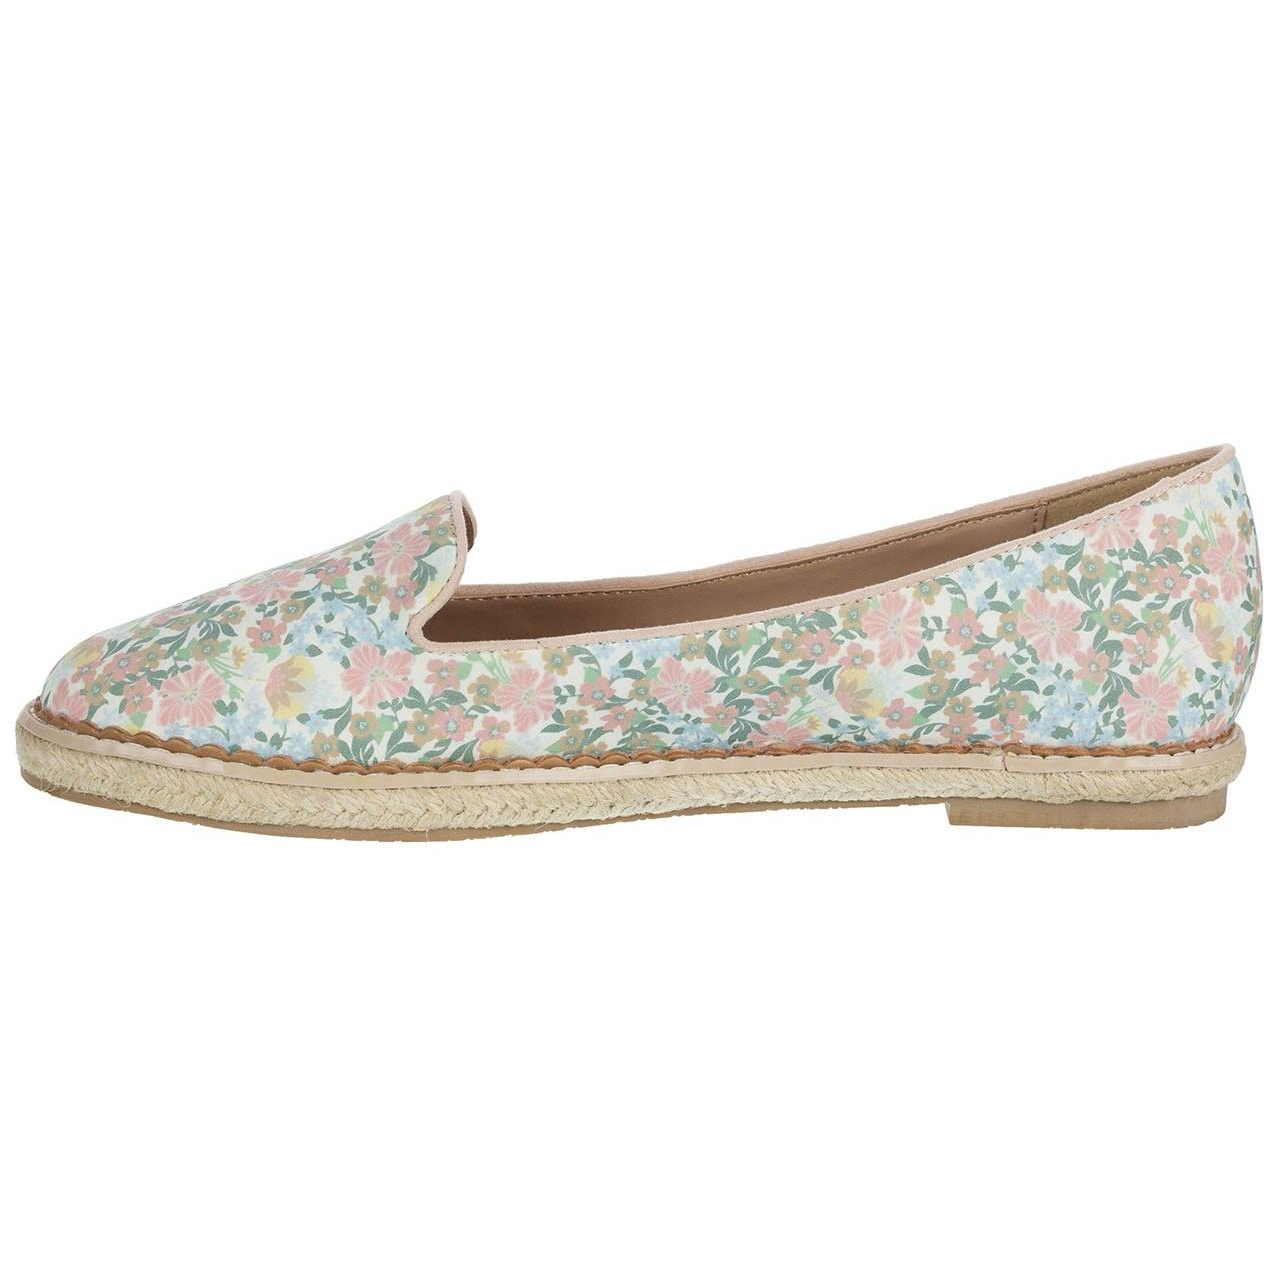 کفش زنانه تخت چاکلت اسکوبار-Chocolate Schubar کفش زنانه مدل Olivia 060 - سفید صورتی آبی سبز گلدار - تخت